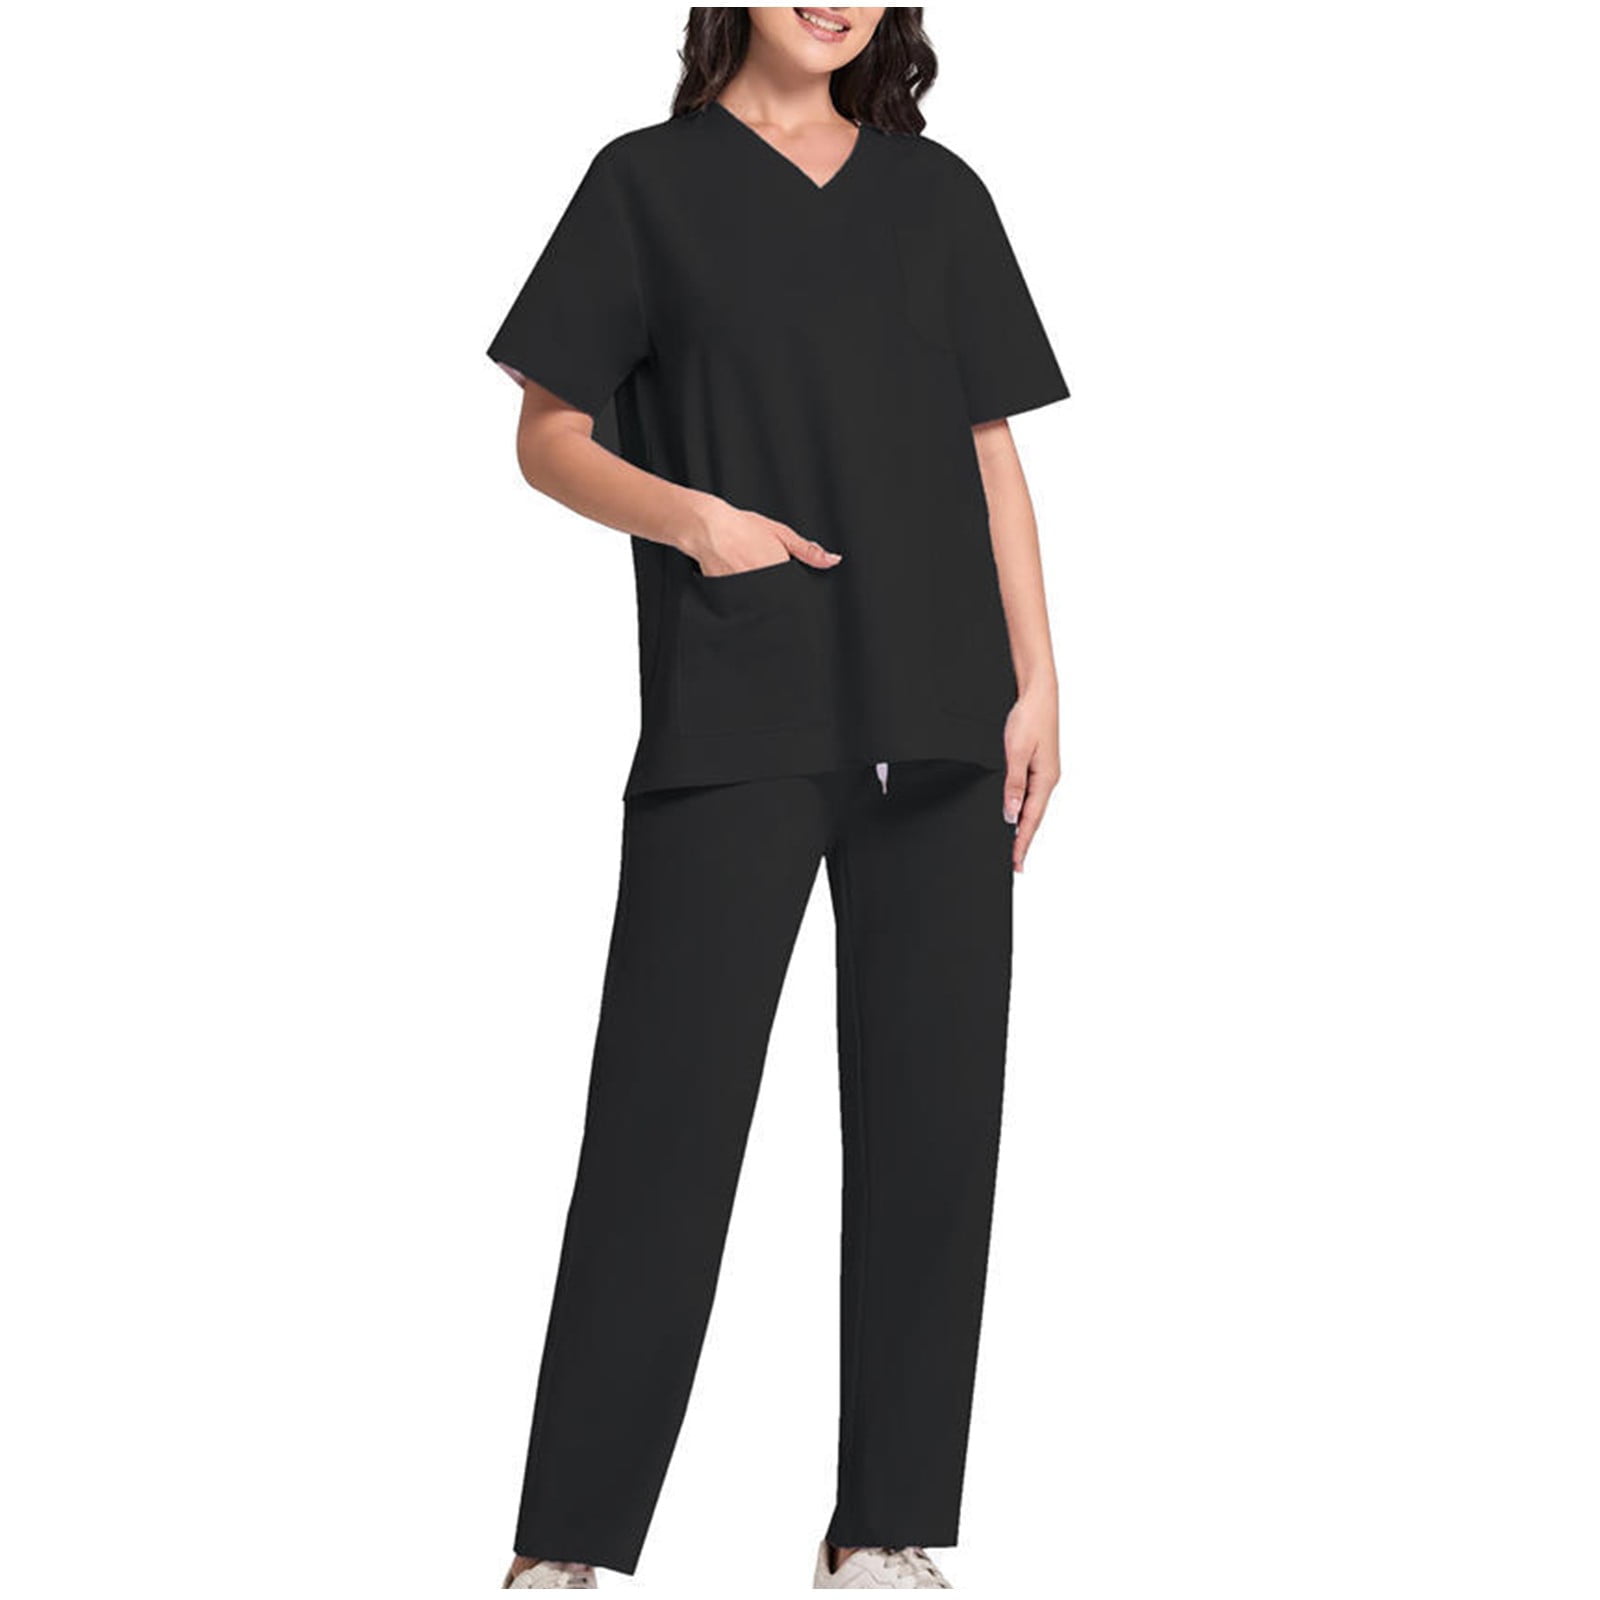 YWDJ 2 Piece Outfits for Women Dressy Pants Sets Fashion Solid Pocket  V-Neck Short Sleeve Blouse Long Pants Nursing Uniform Sets Black L 